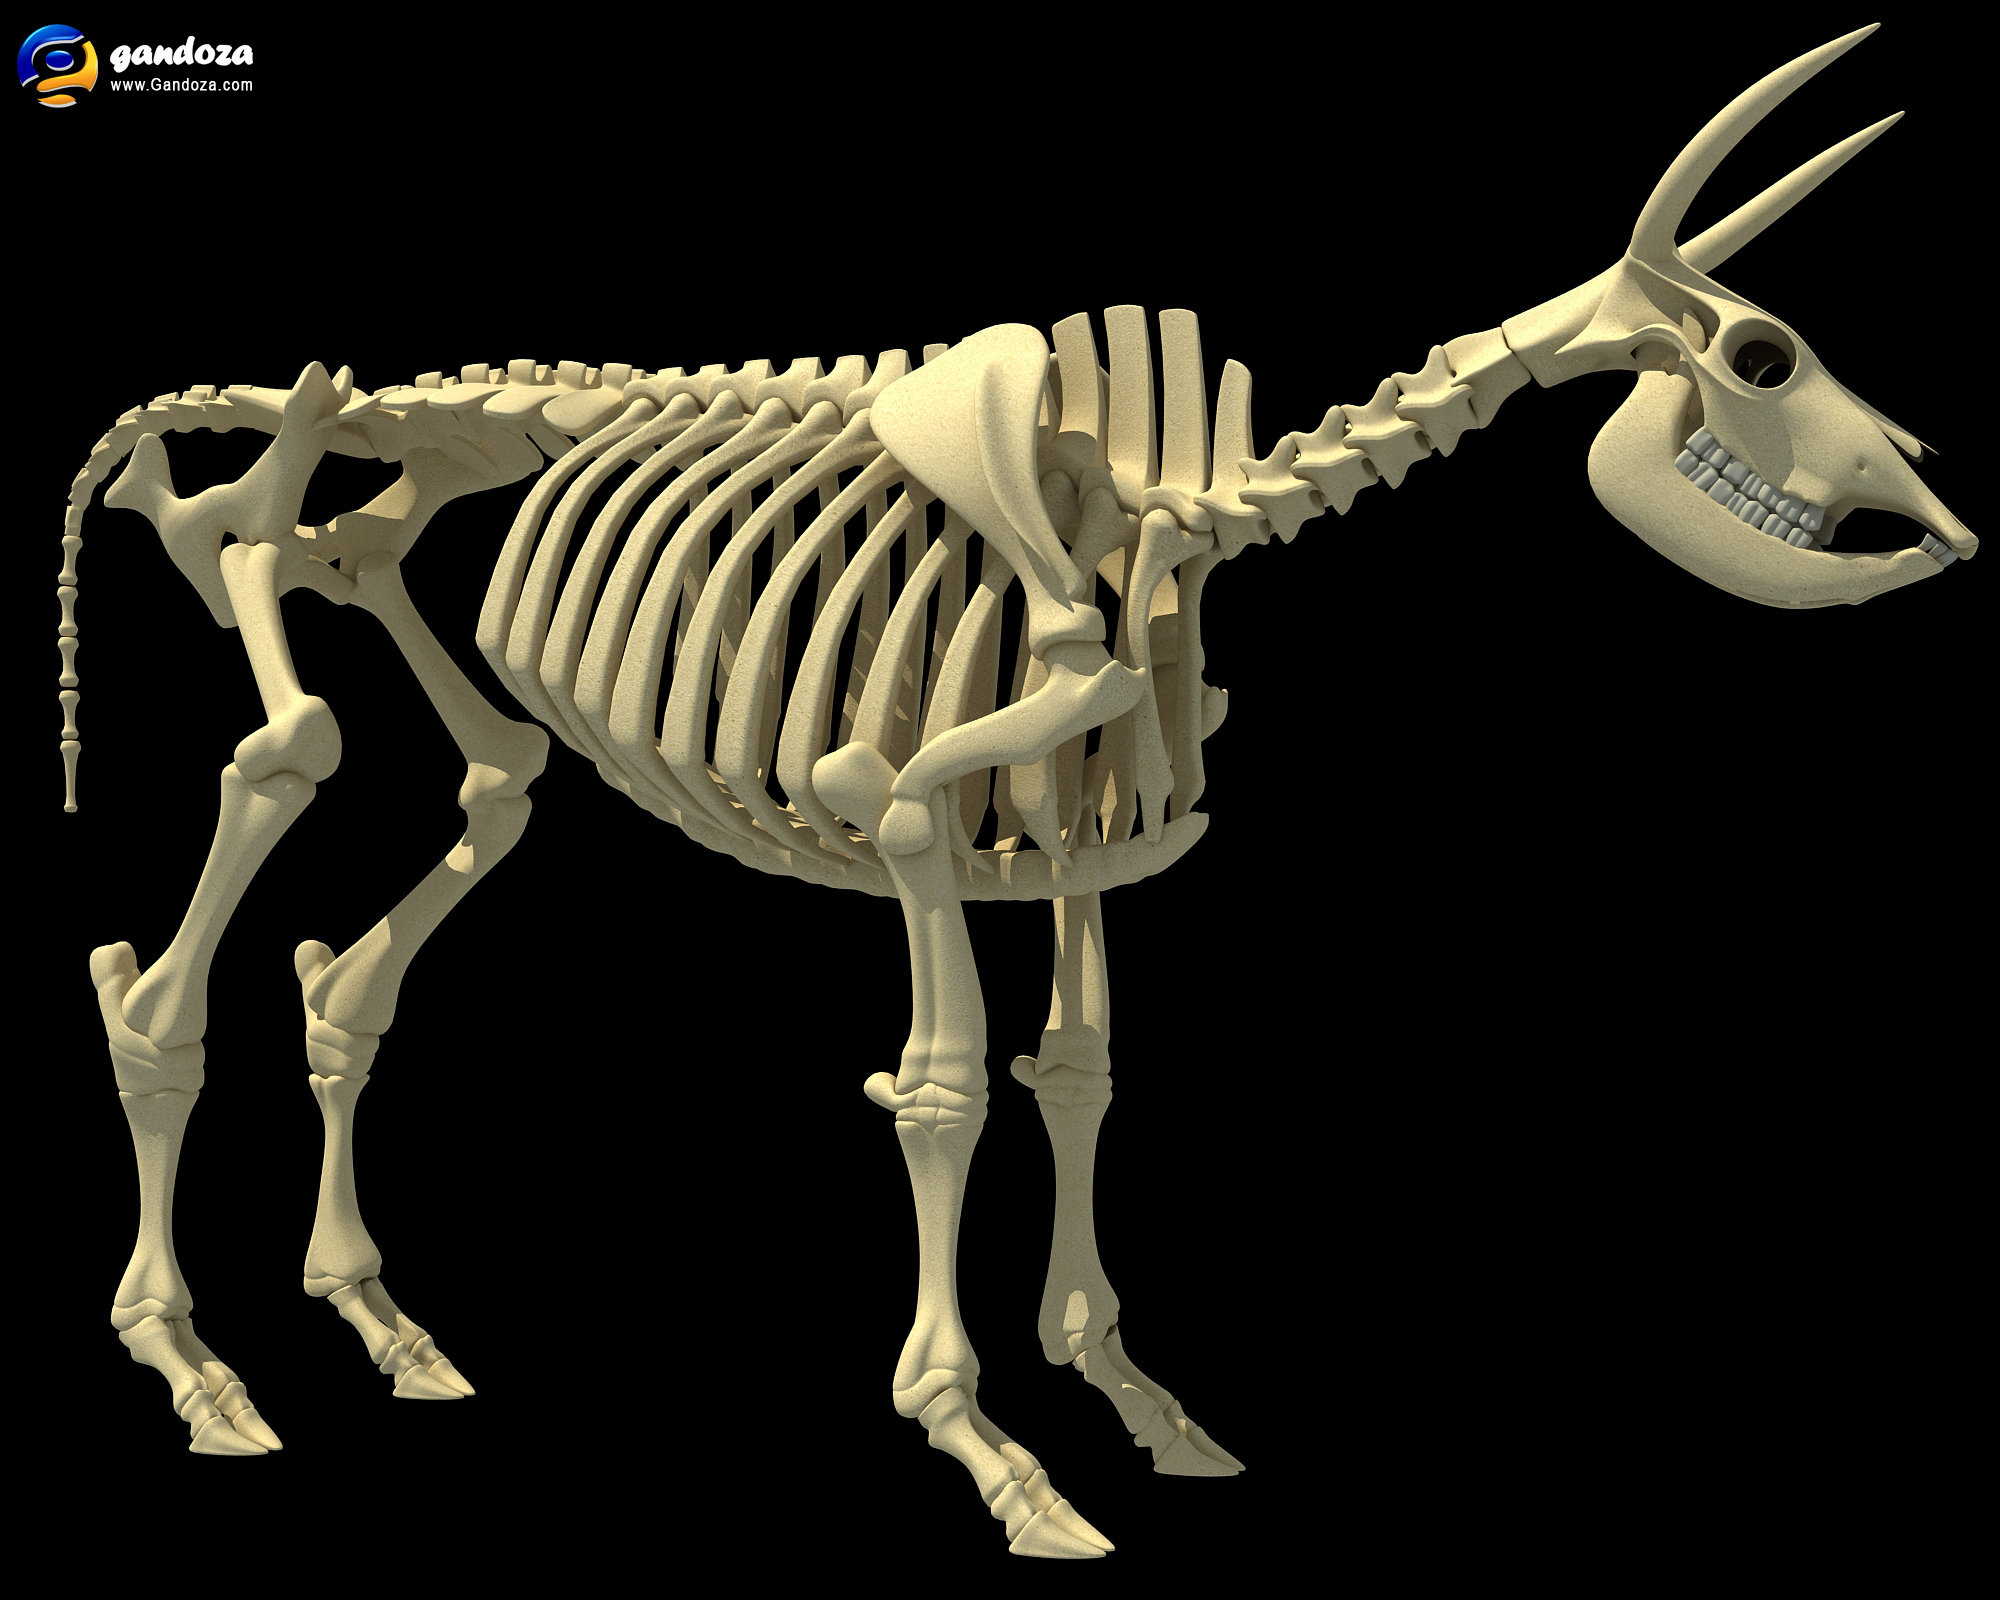 Cow Skeleton by Gandoza on deviantART